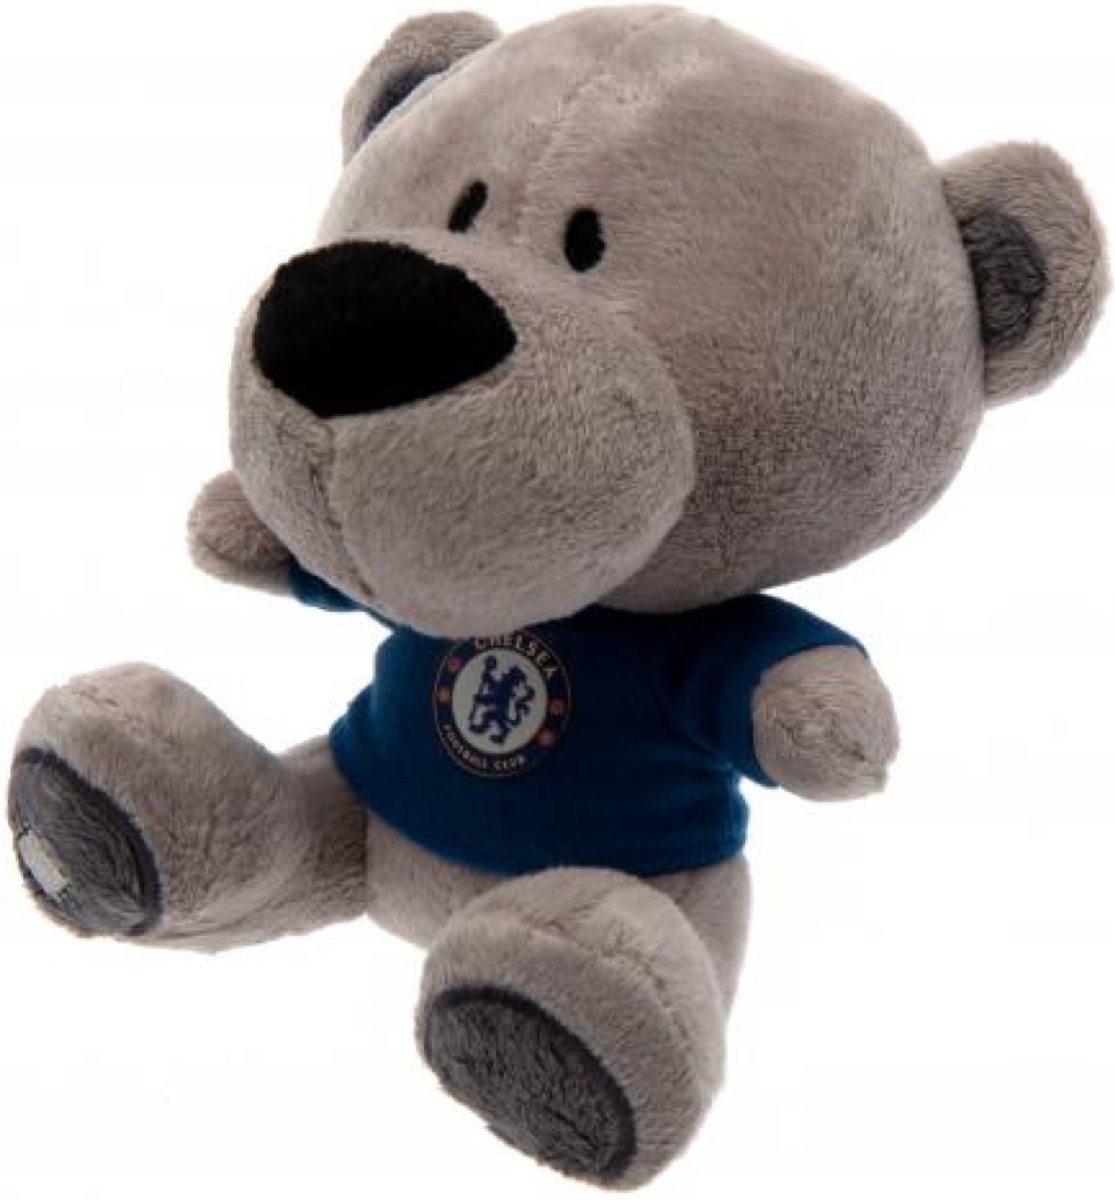 Chelsea - Timmy Bear - Chelsea FC